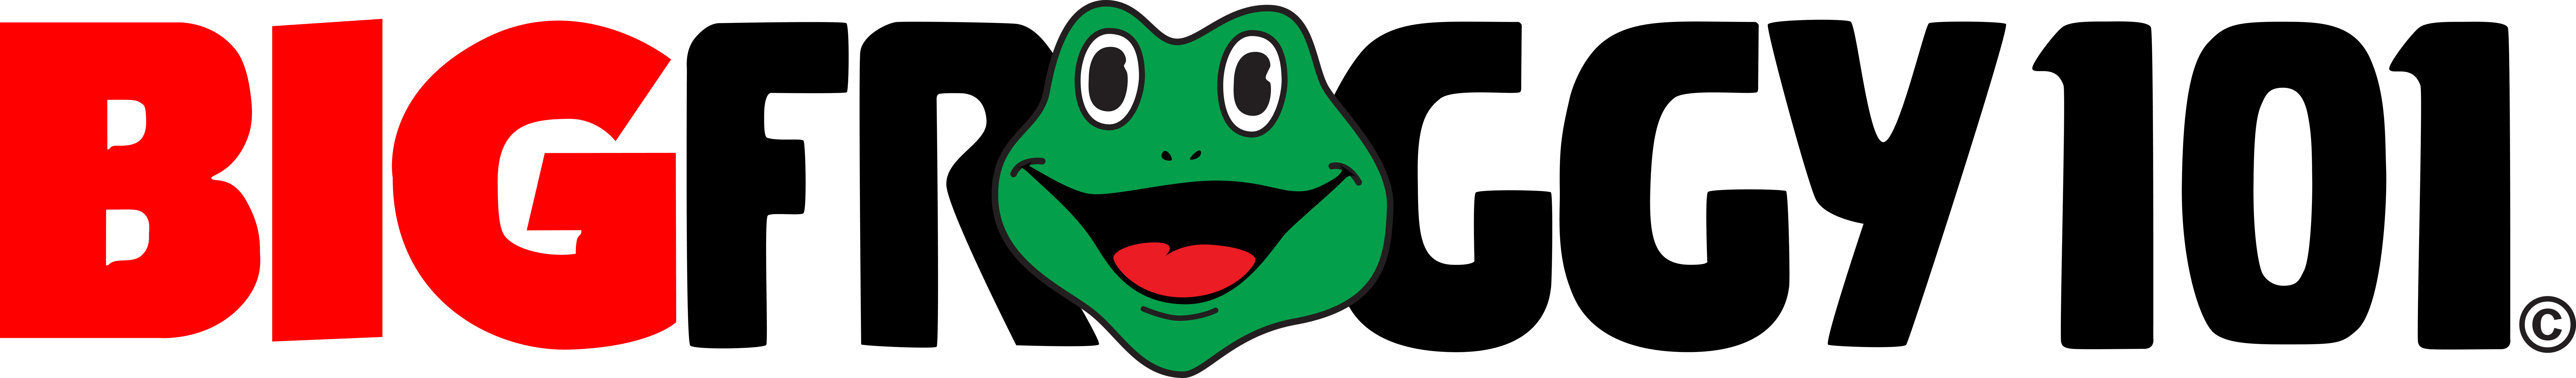 Bigfroggy101 - Froggy 101 Bumper Sticker (18026x2643)